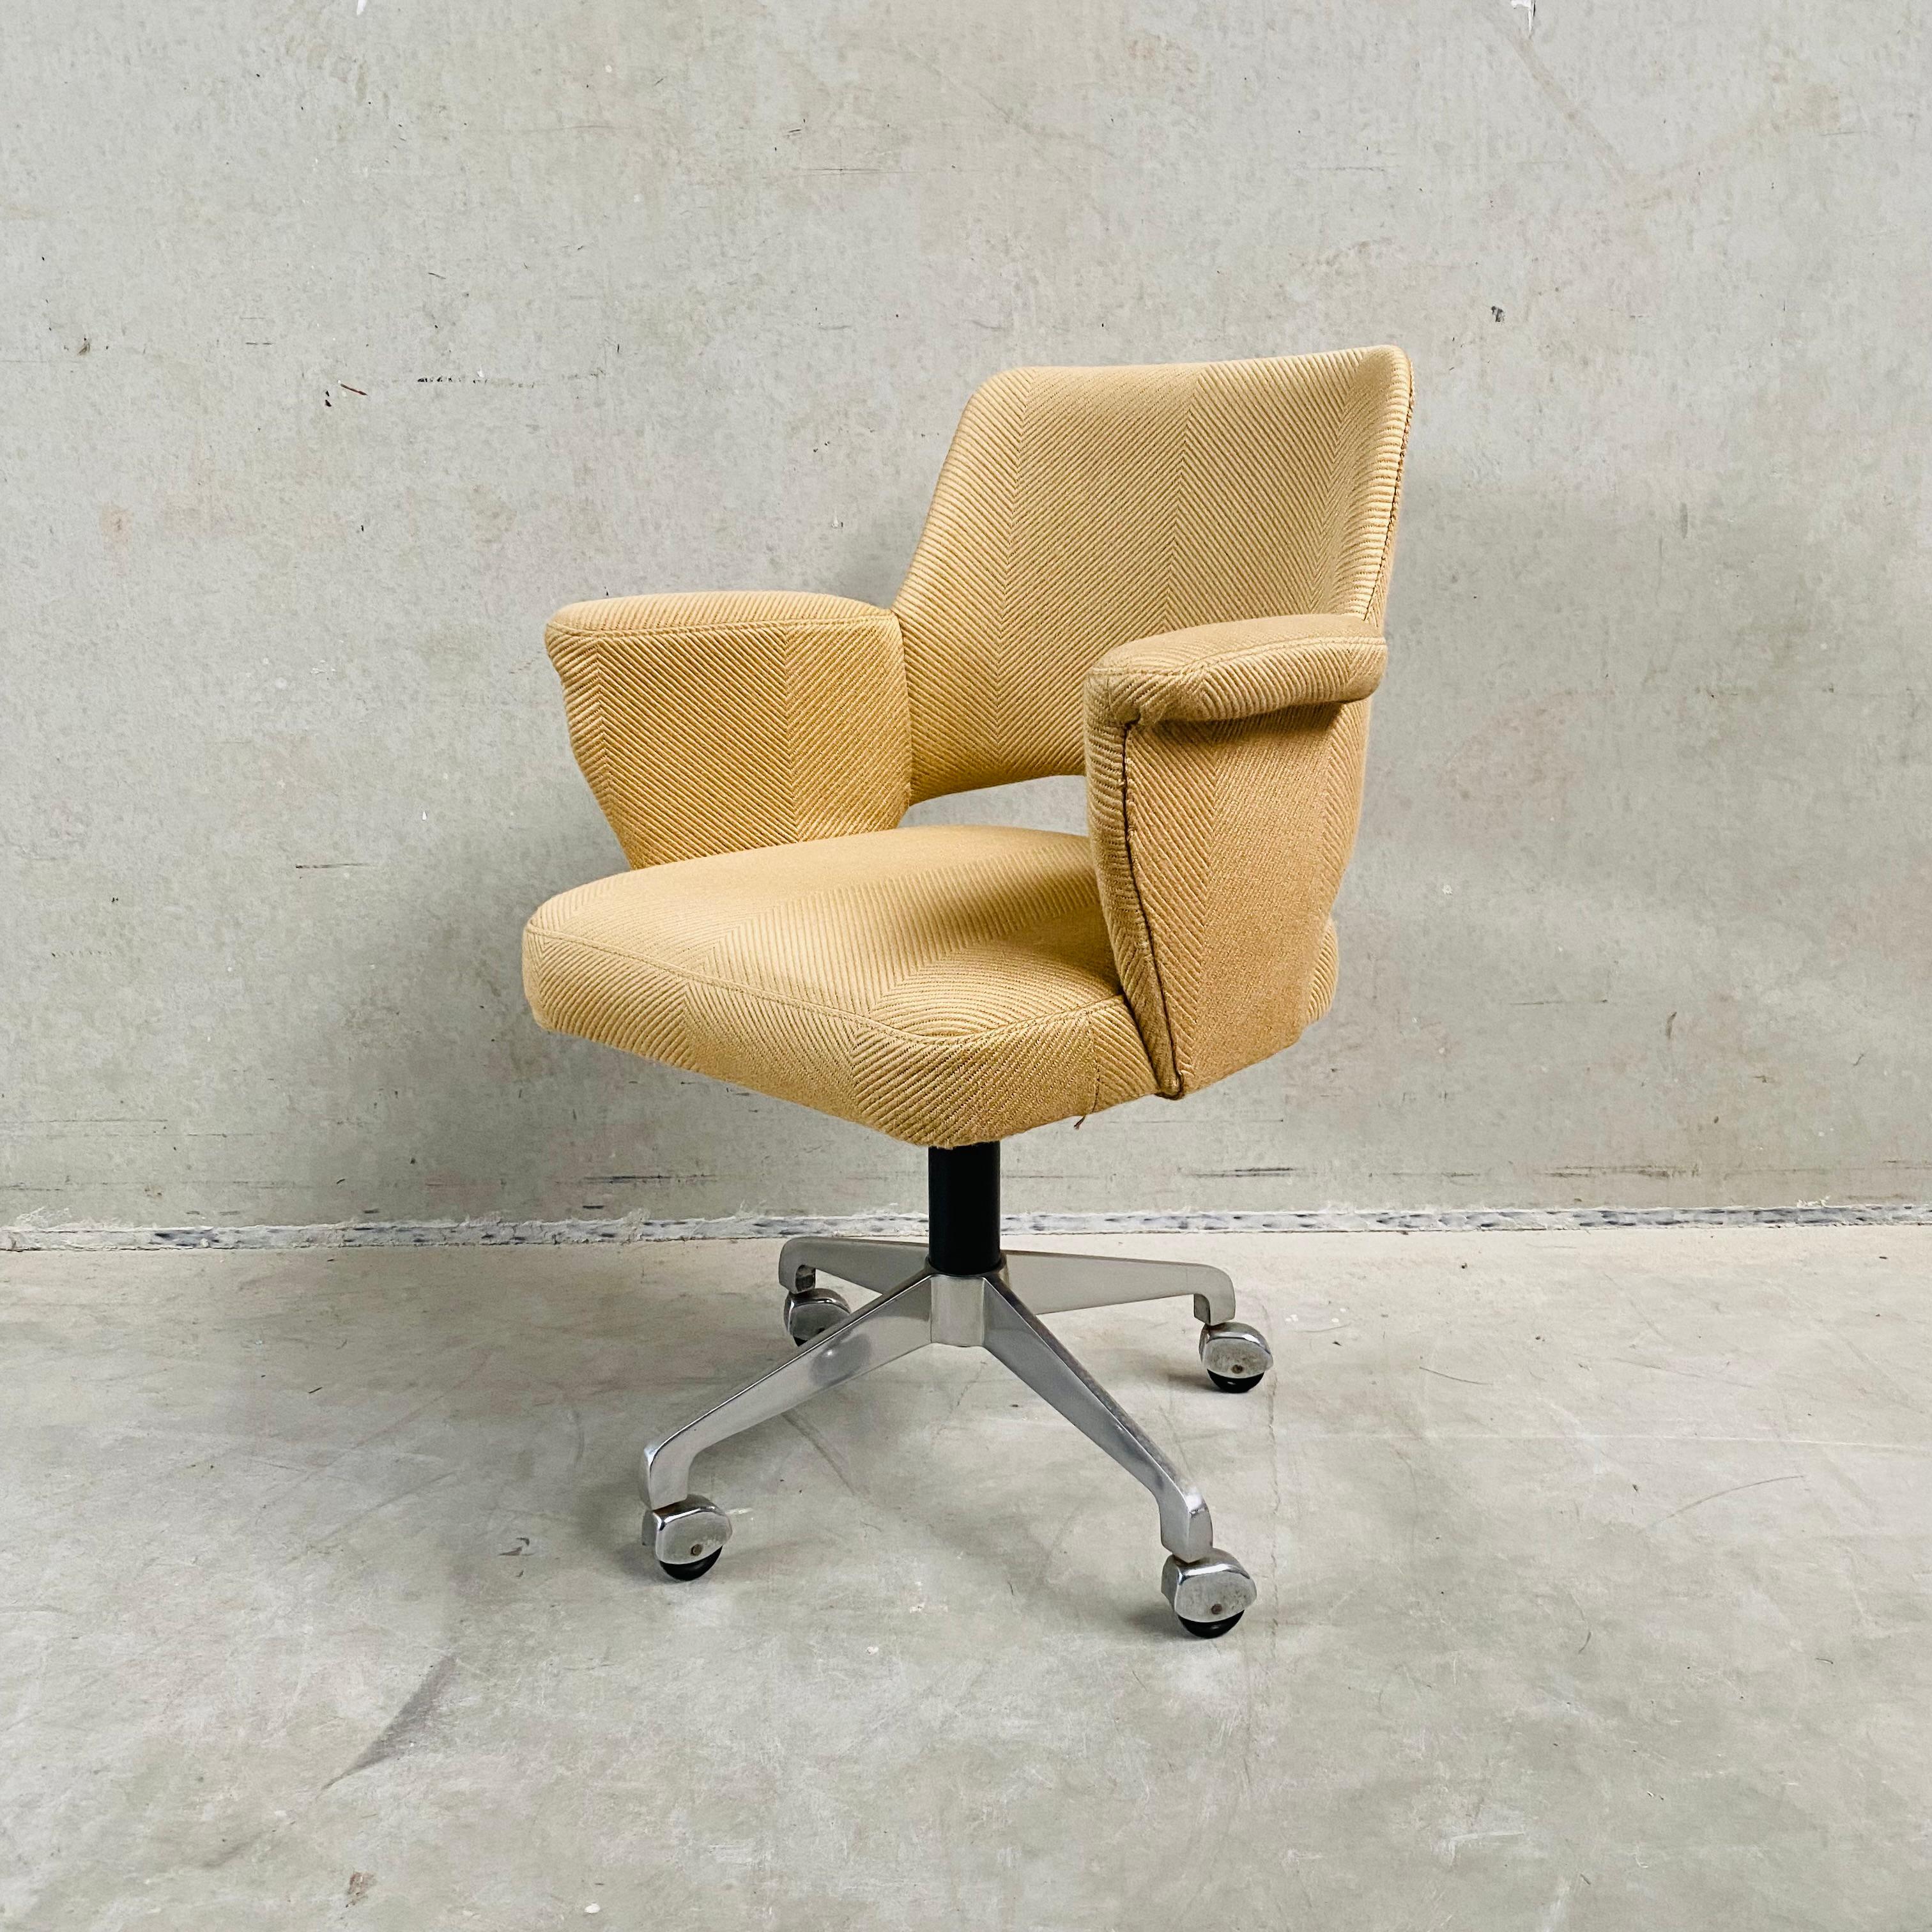 AP Originals Swiffle Desk Chair by Hein Salomonson 1960 For Sale 3